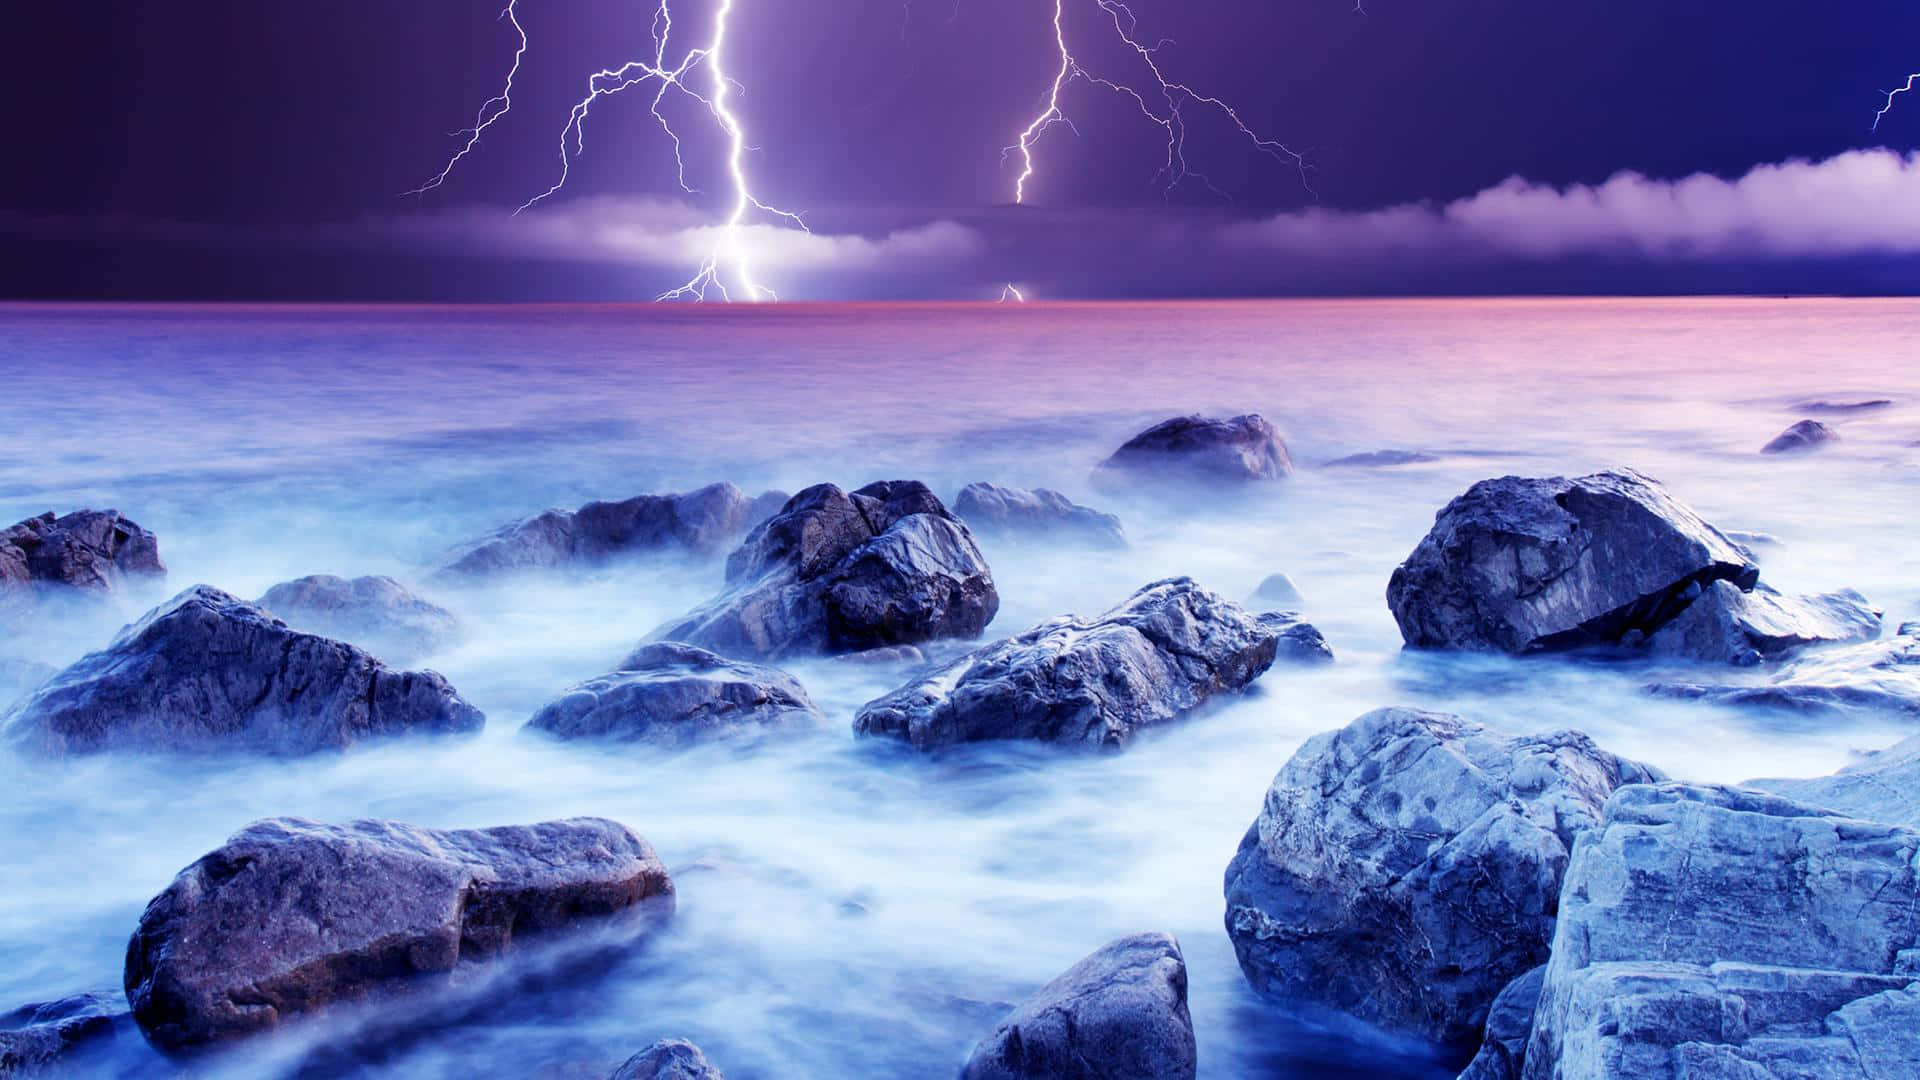 Dramatic Purple Lightning Strikes in the Night Sky